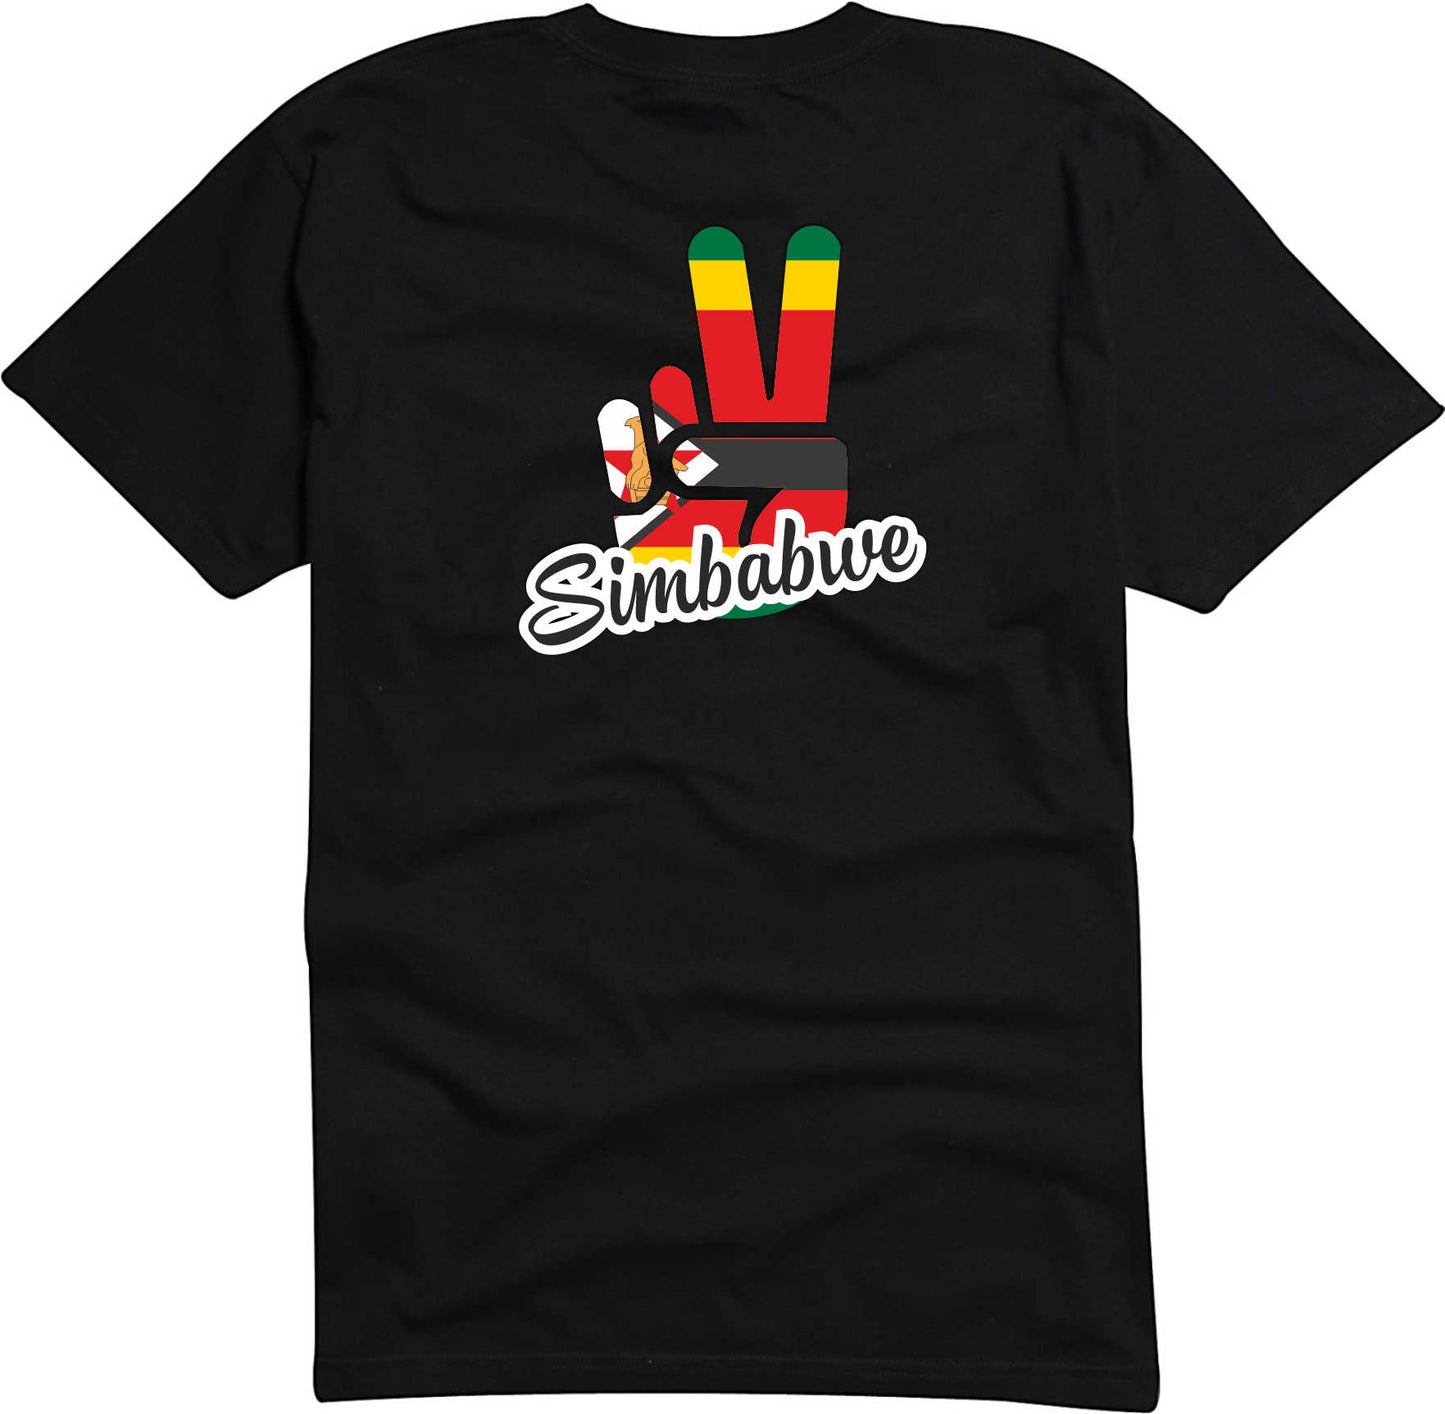 T-Shirt Herren - Victory - Flagge / Fahne - Simbabwe - Sieg